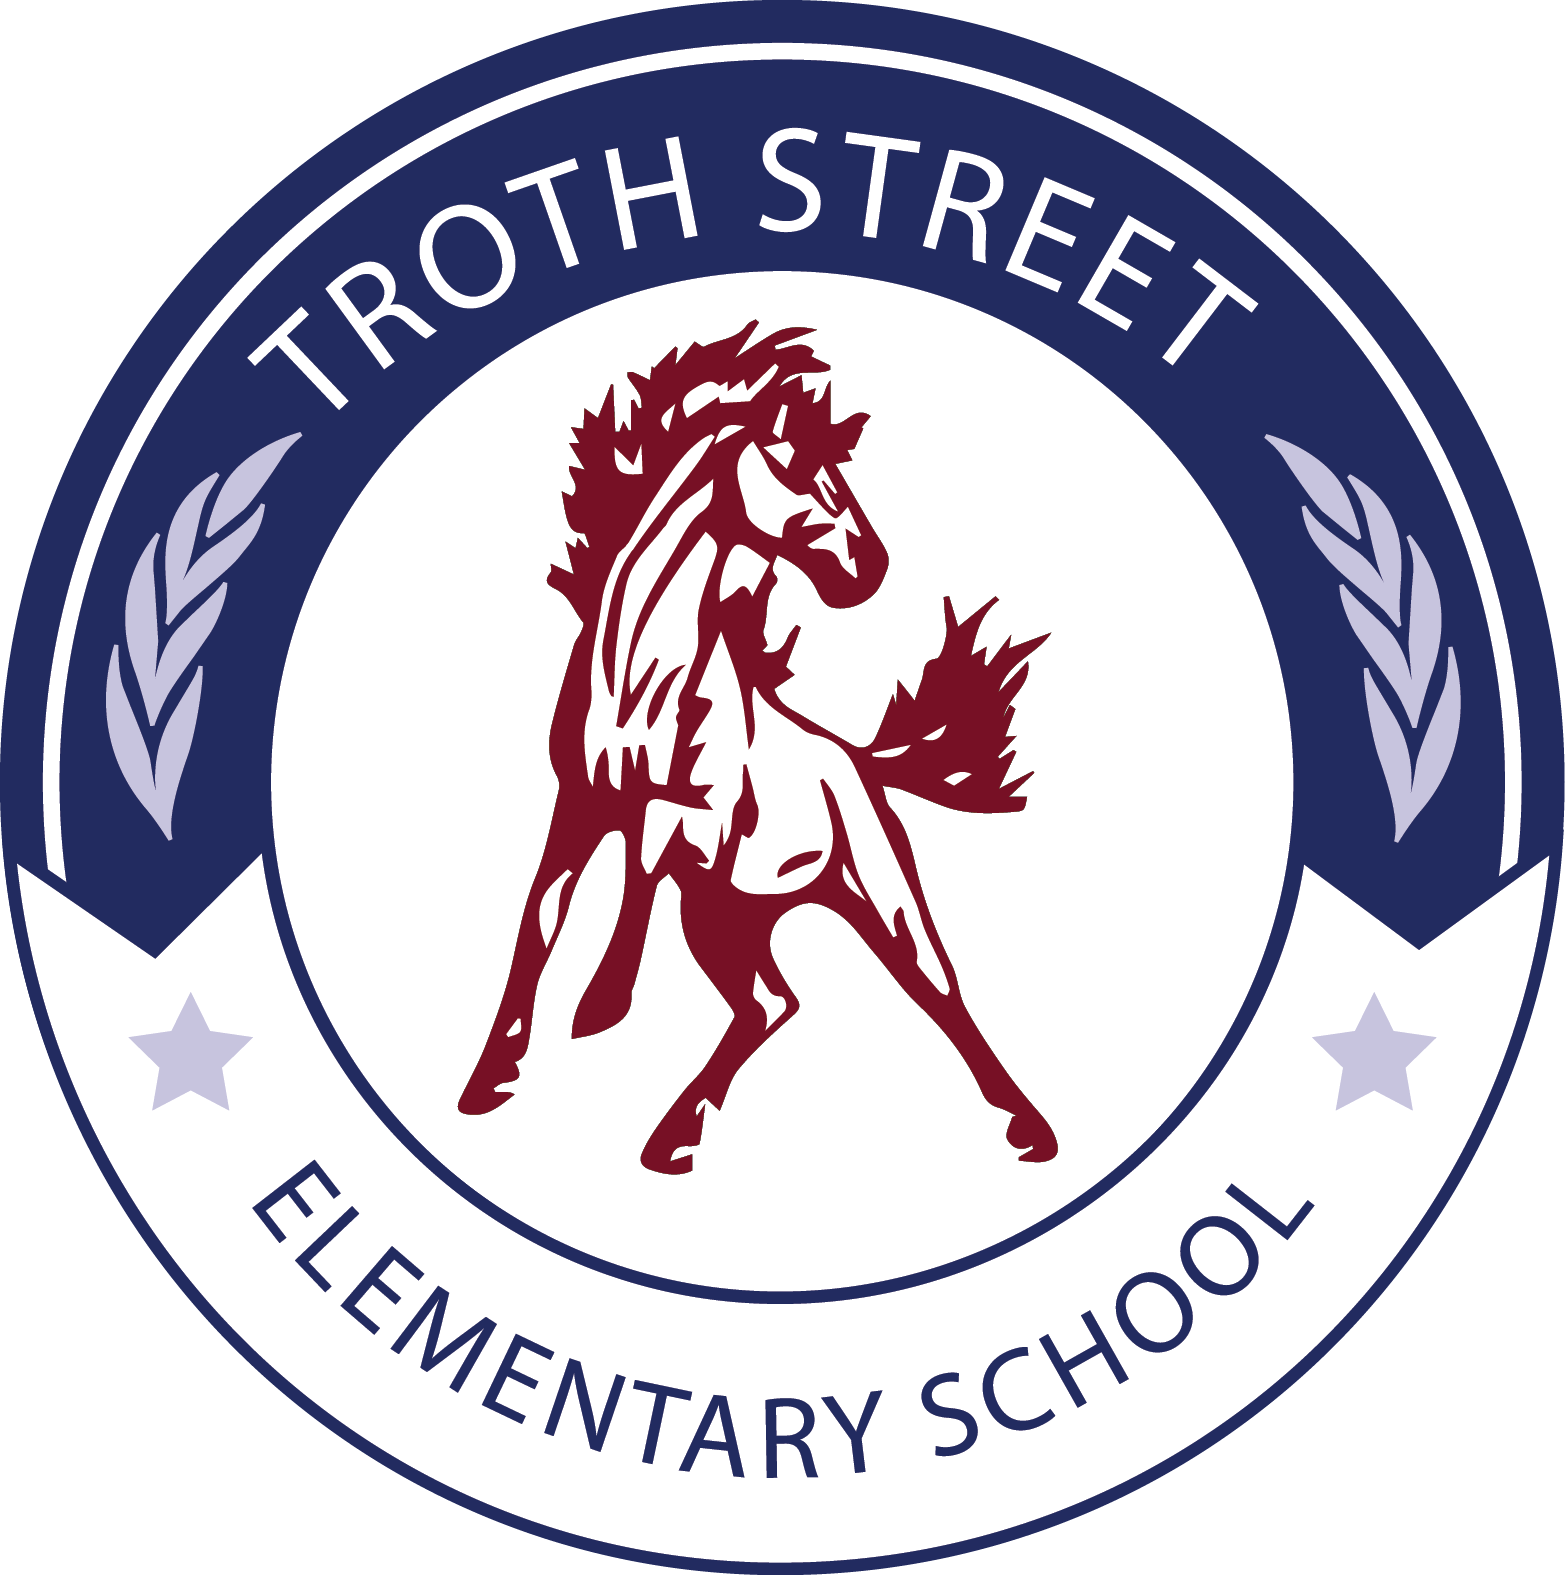 Troth Street logo.png